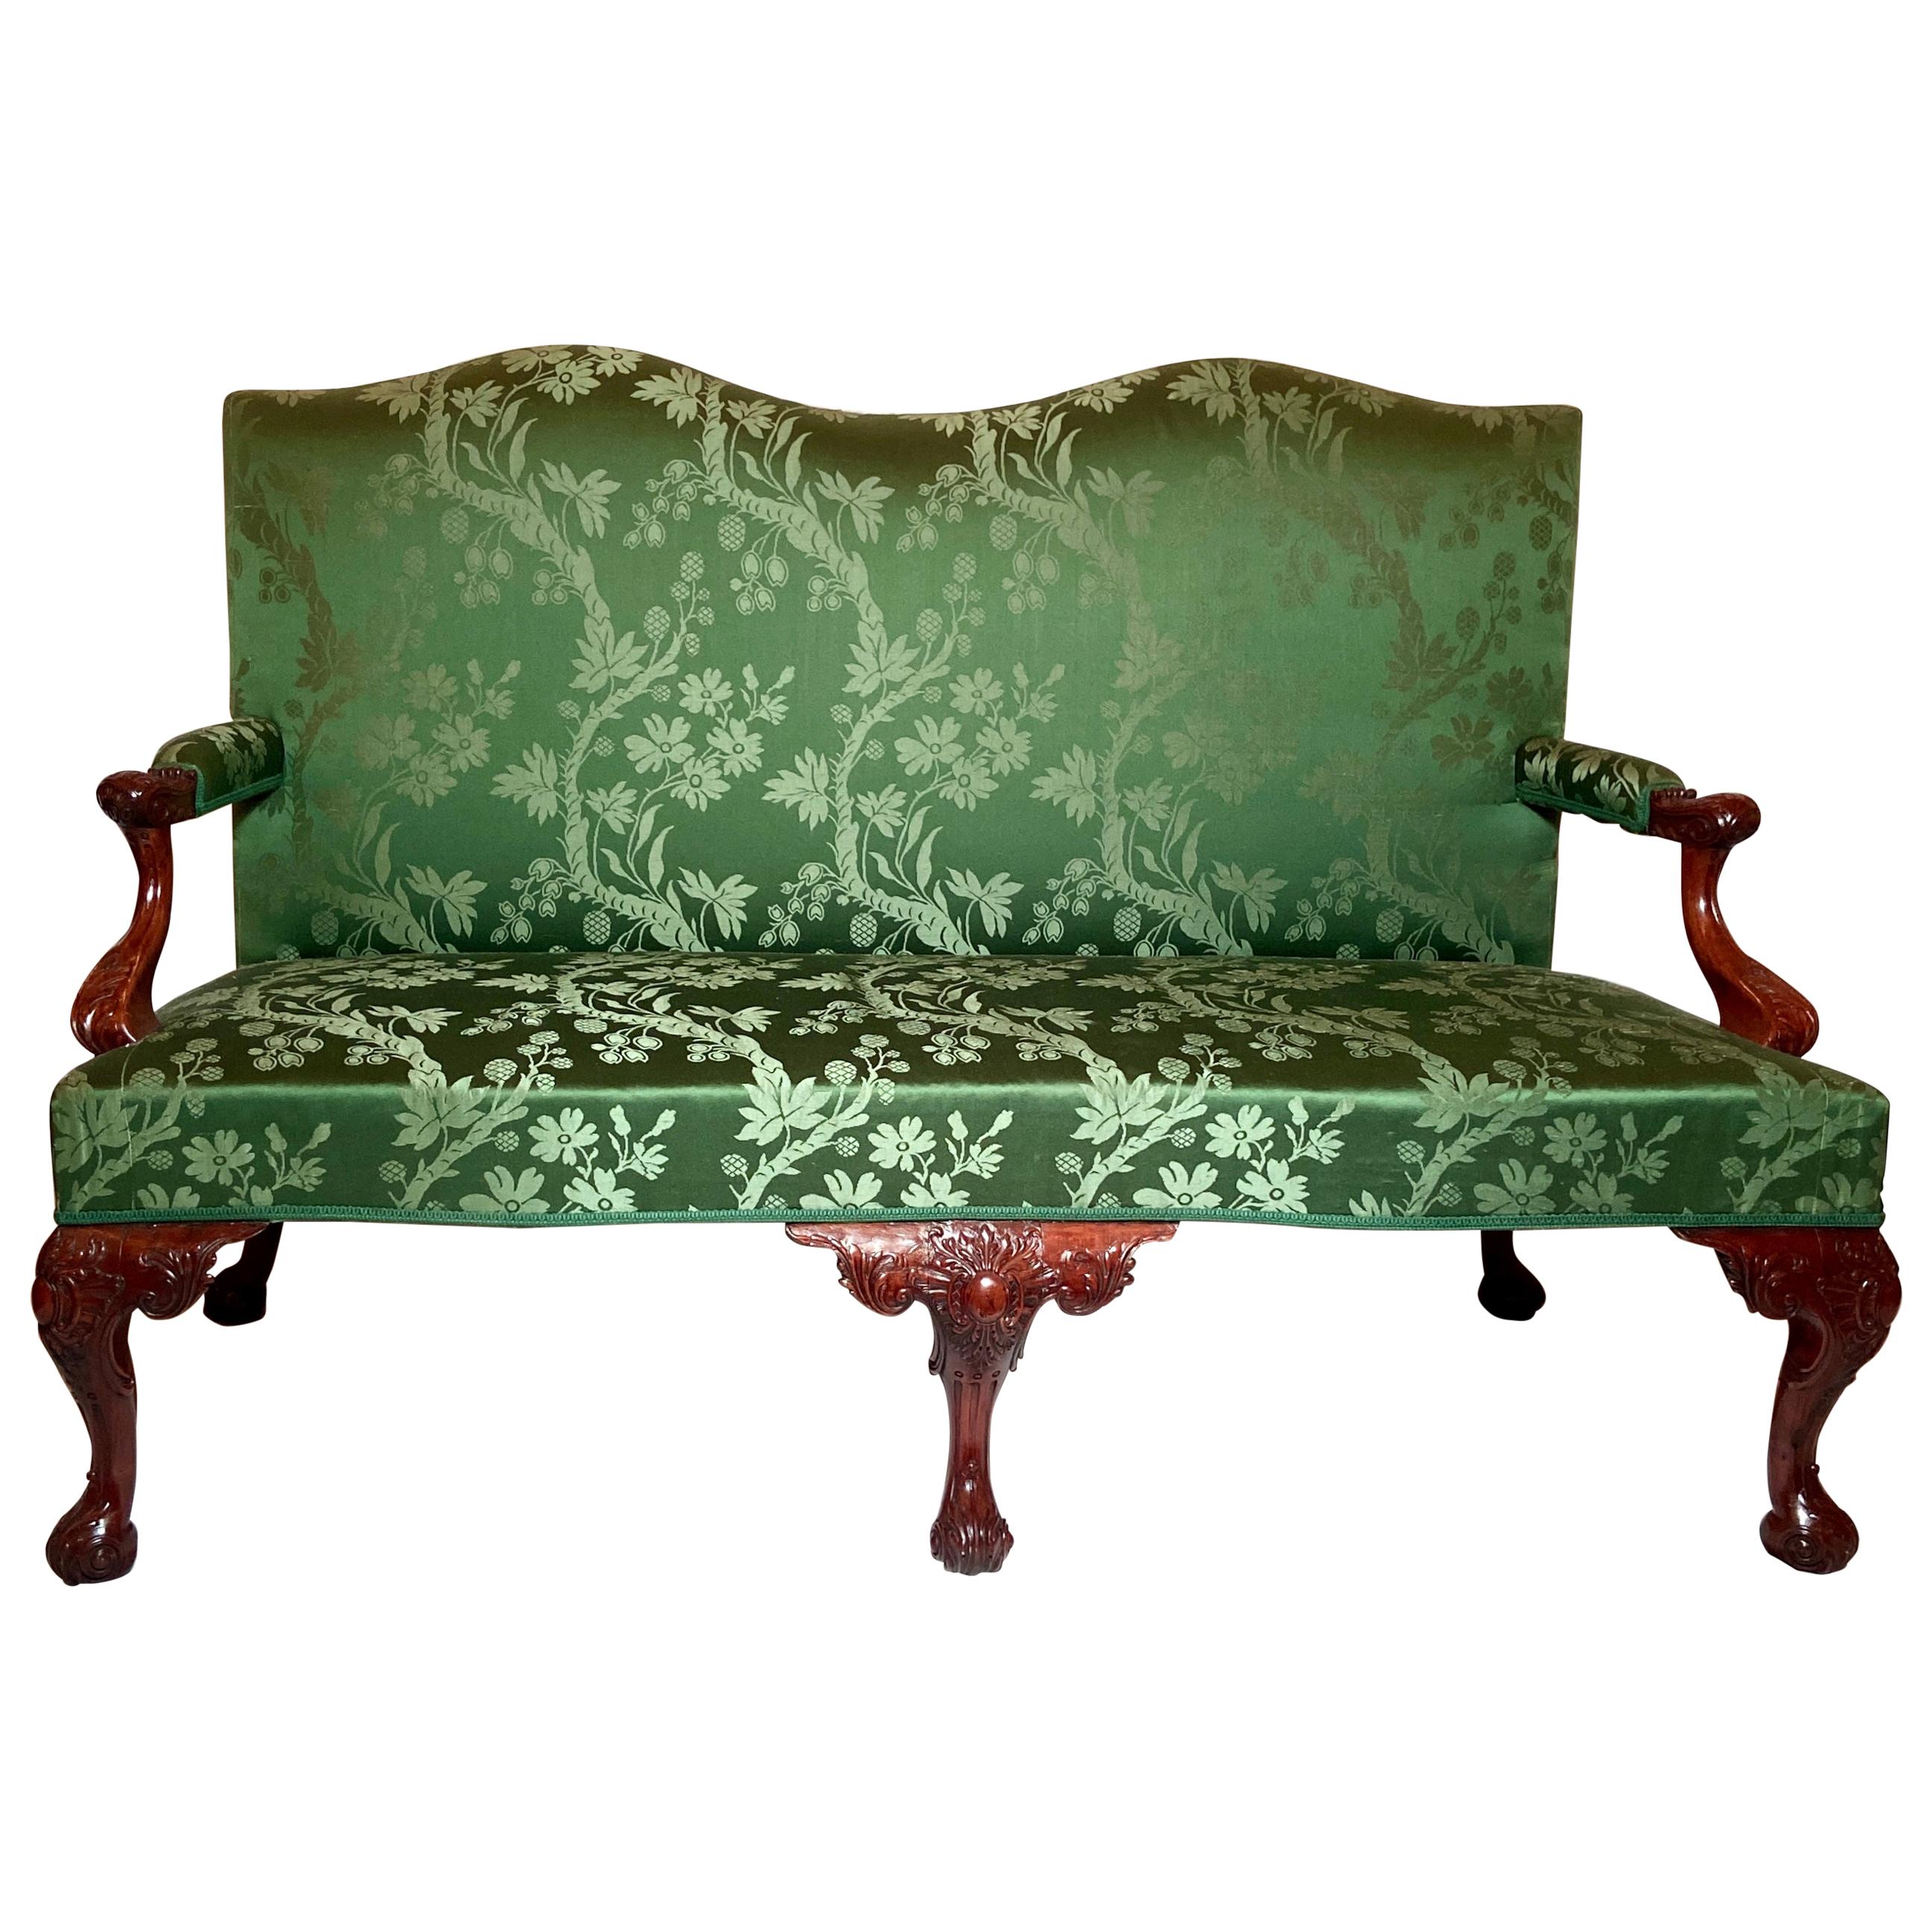 Antique English George III Green Upholstered Mahogany Settee, Circa 1790-1820